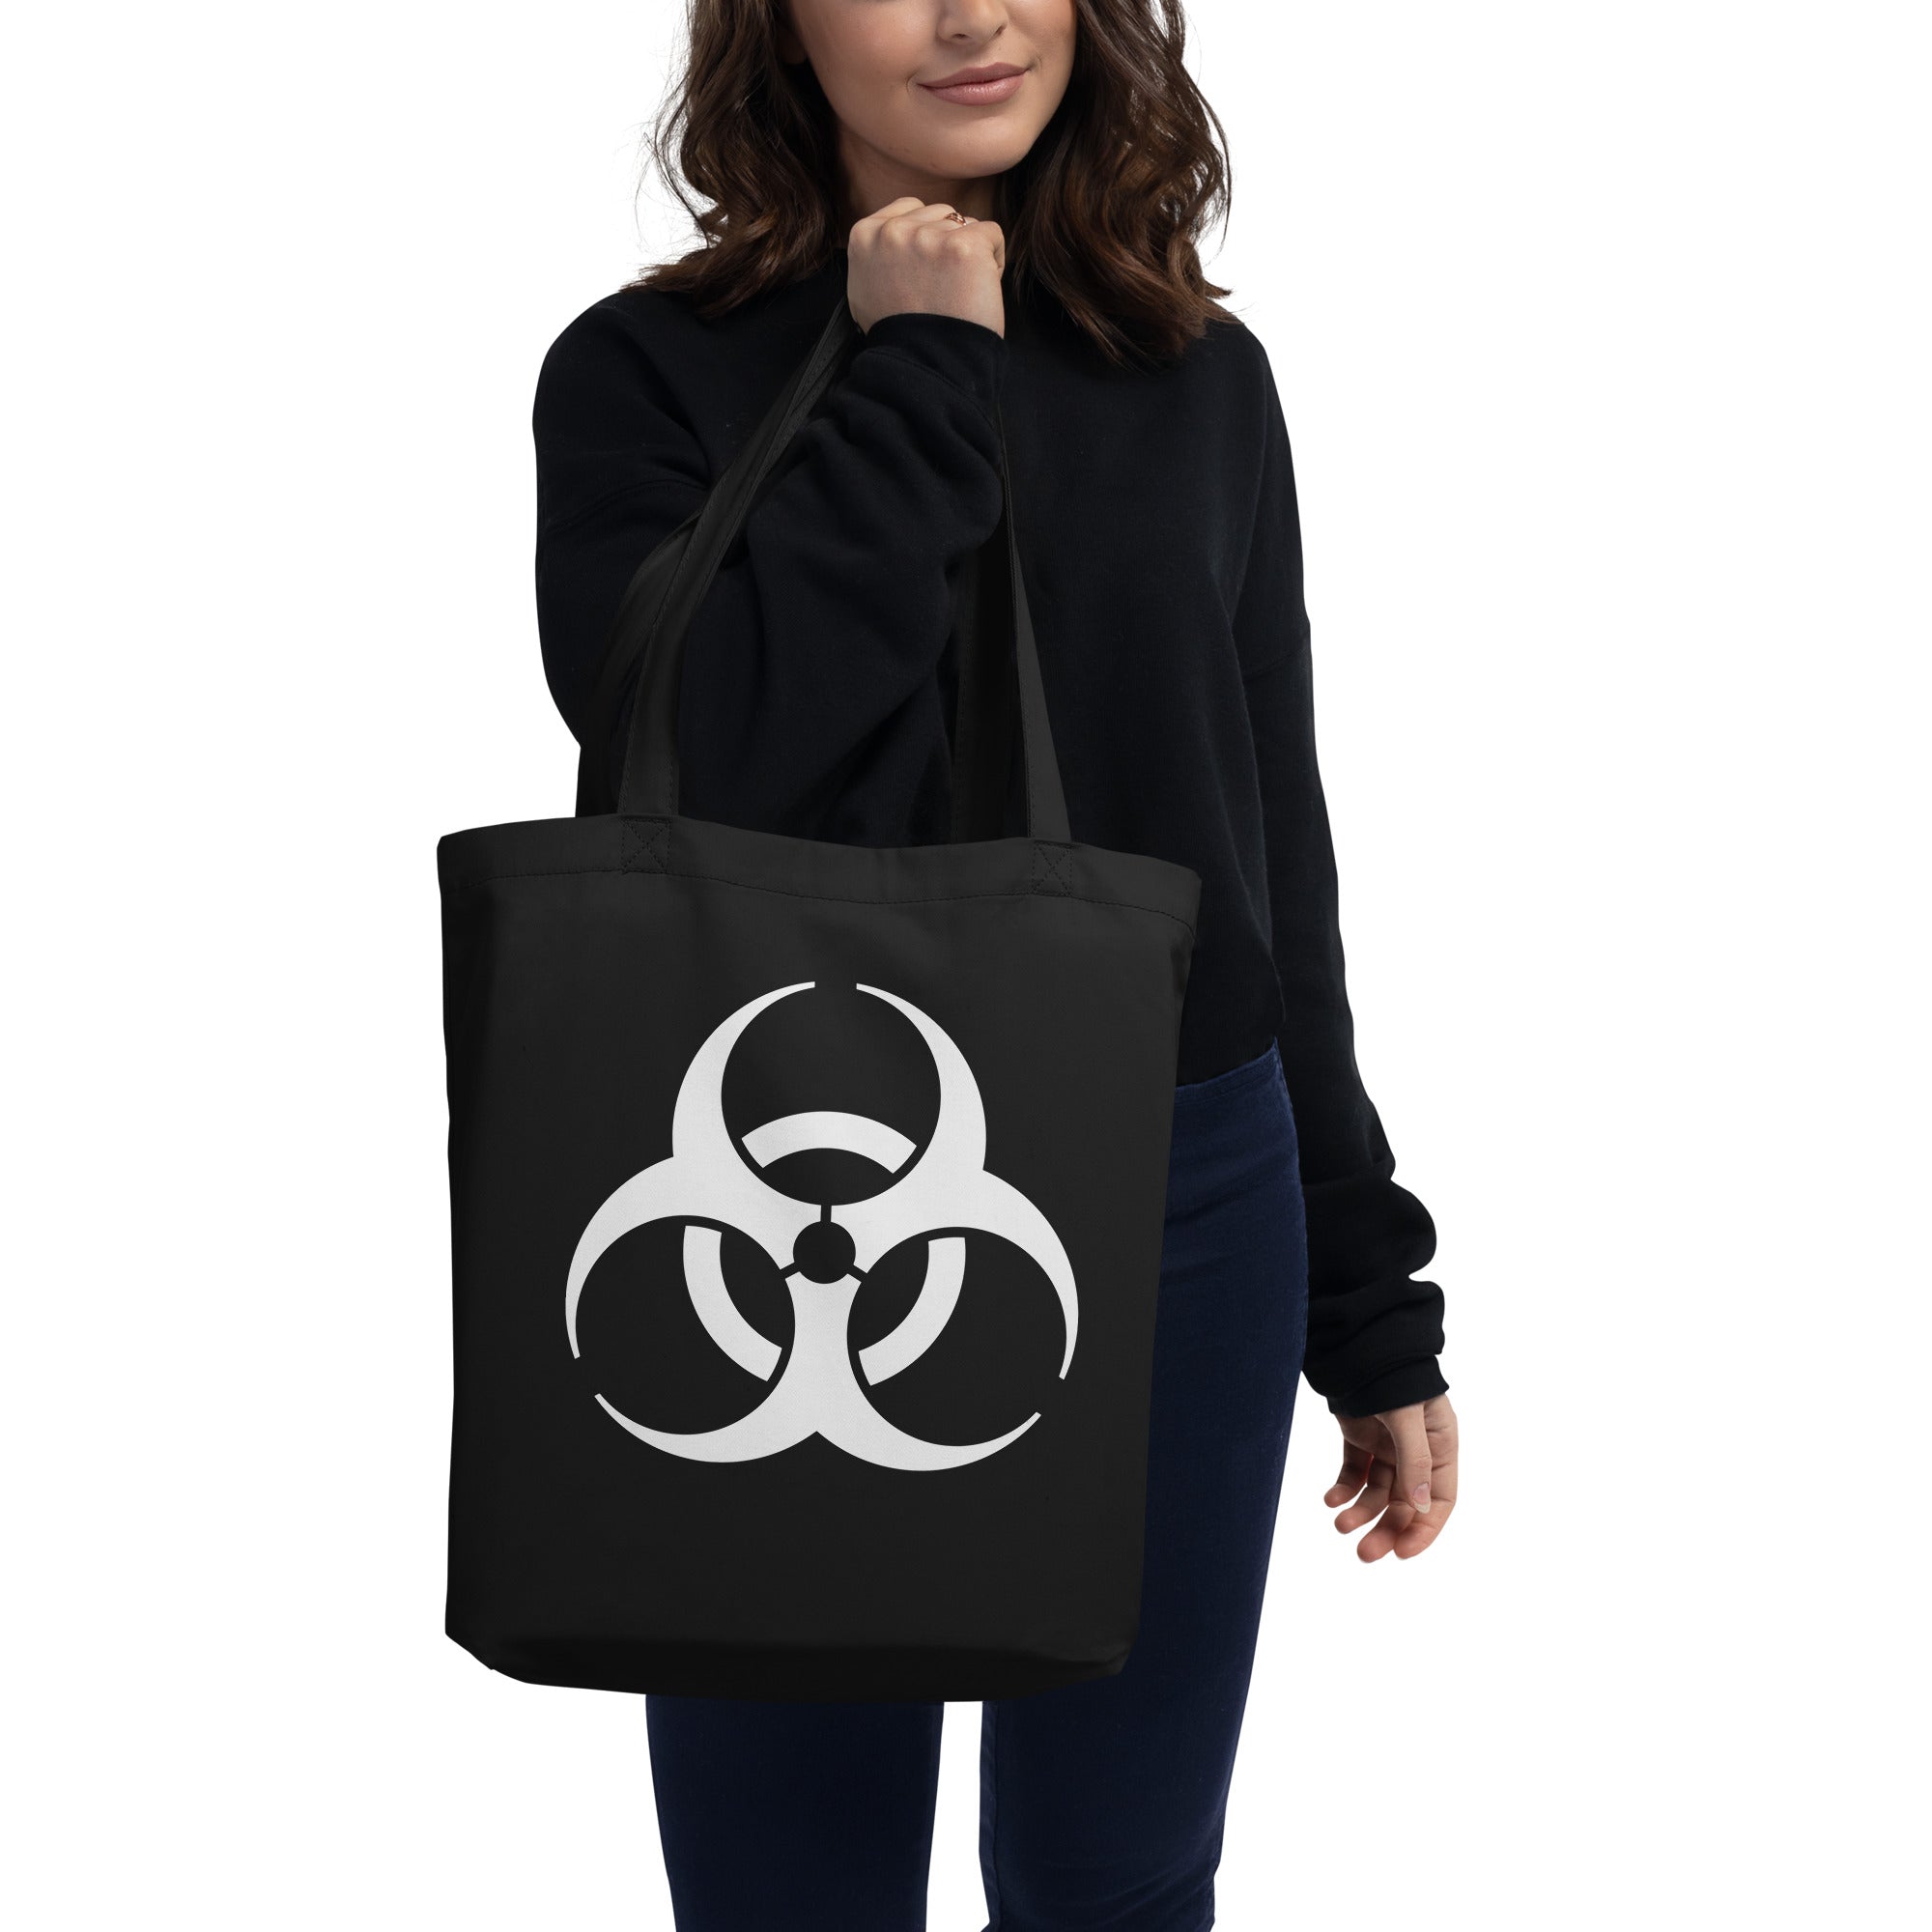 White Bio Hazard Symbol Warning Sign Eco Tote Bag - Edge of Life Designs